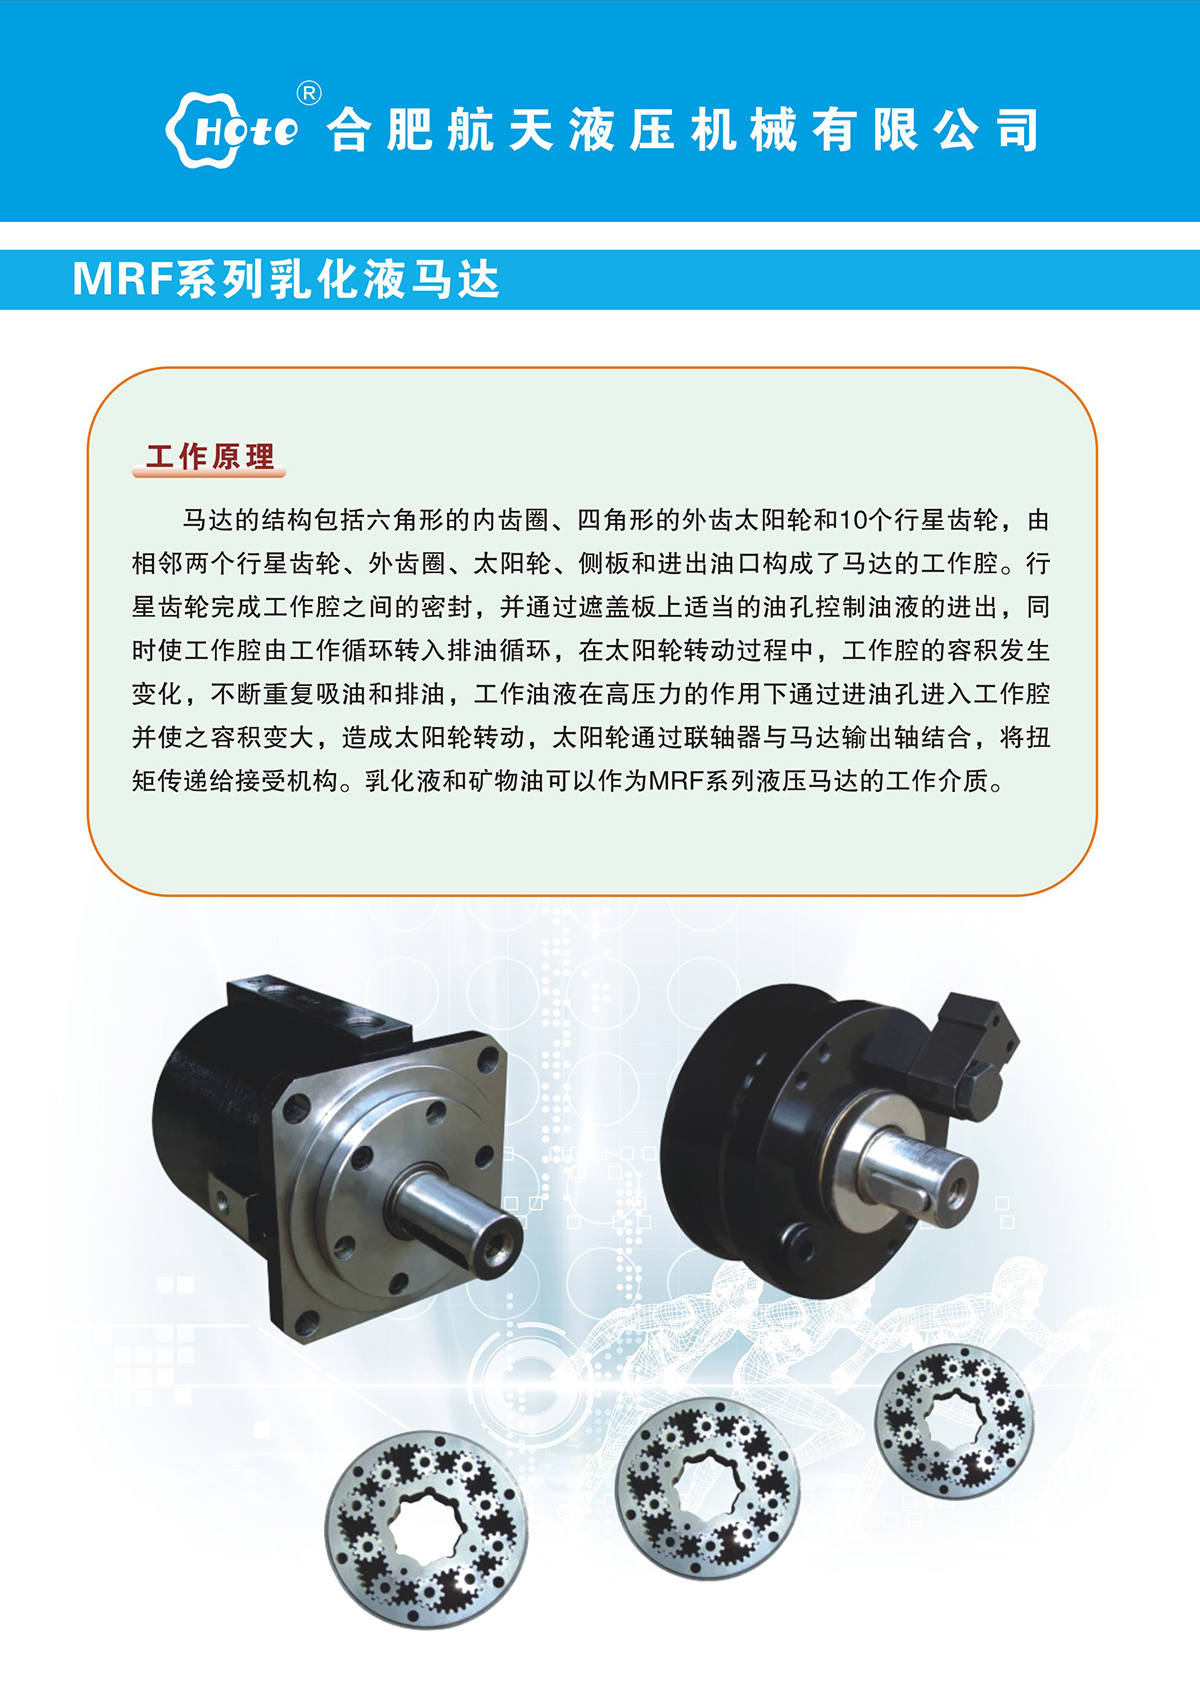 MRF系列乳化液马达.jpg